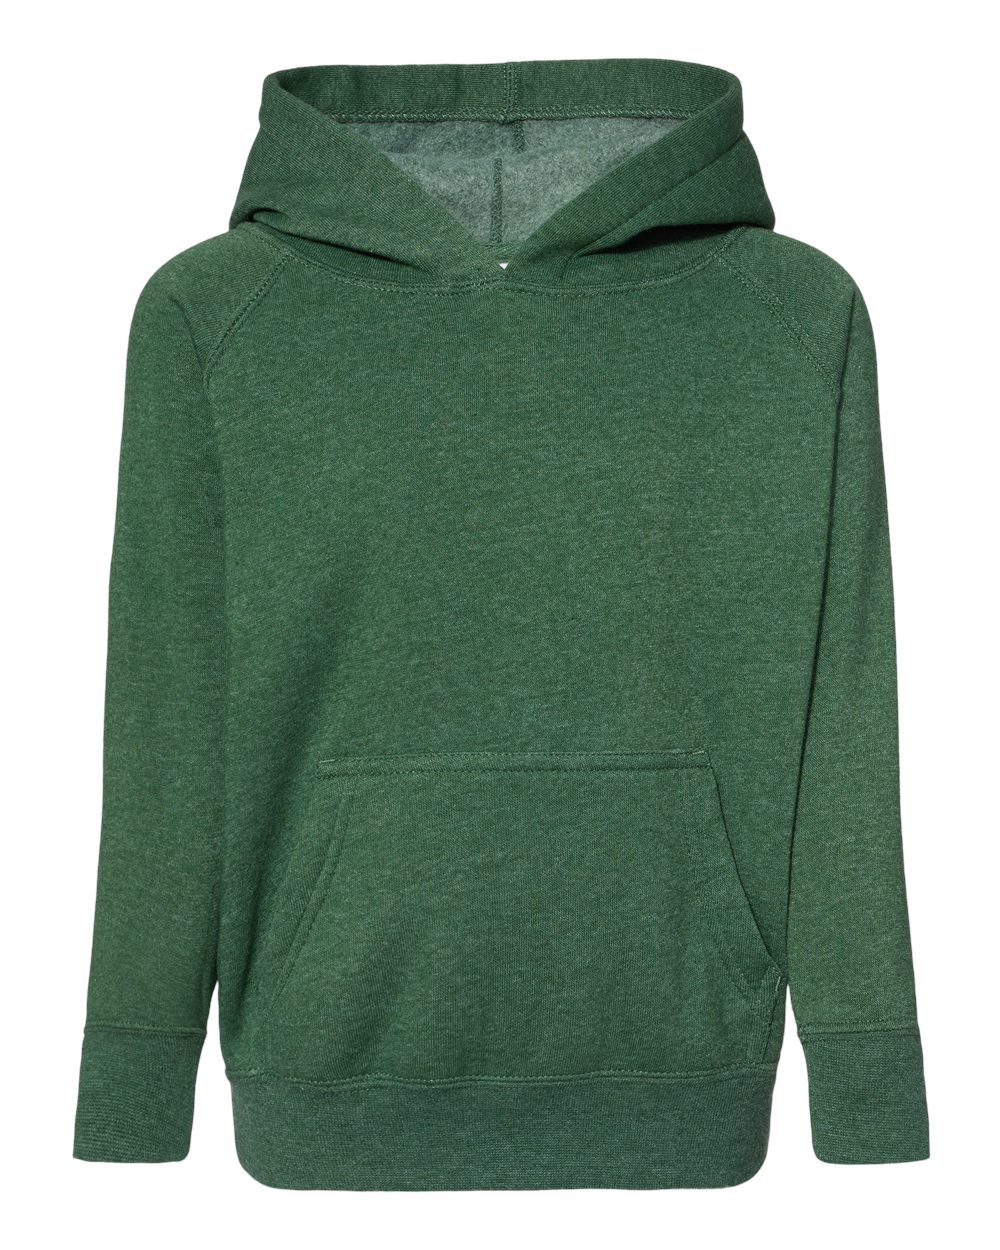 Independent Trading Co. - Toddler Special Blend Raglan Hooded Sweatshirt